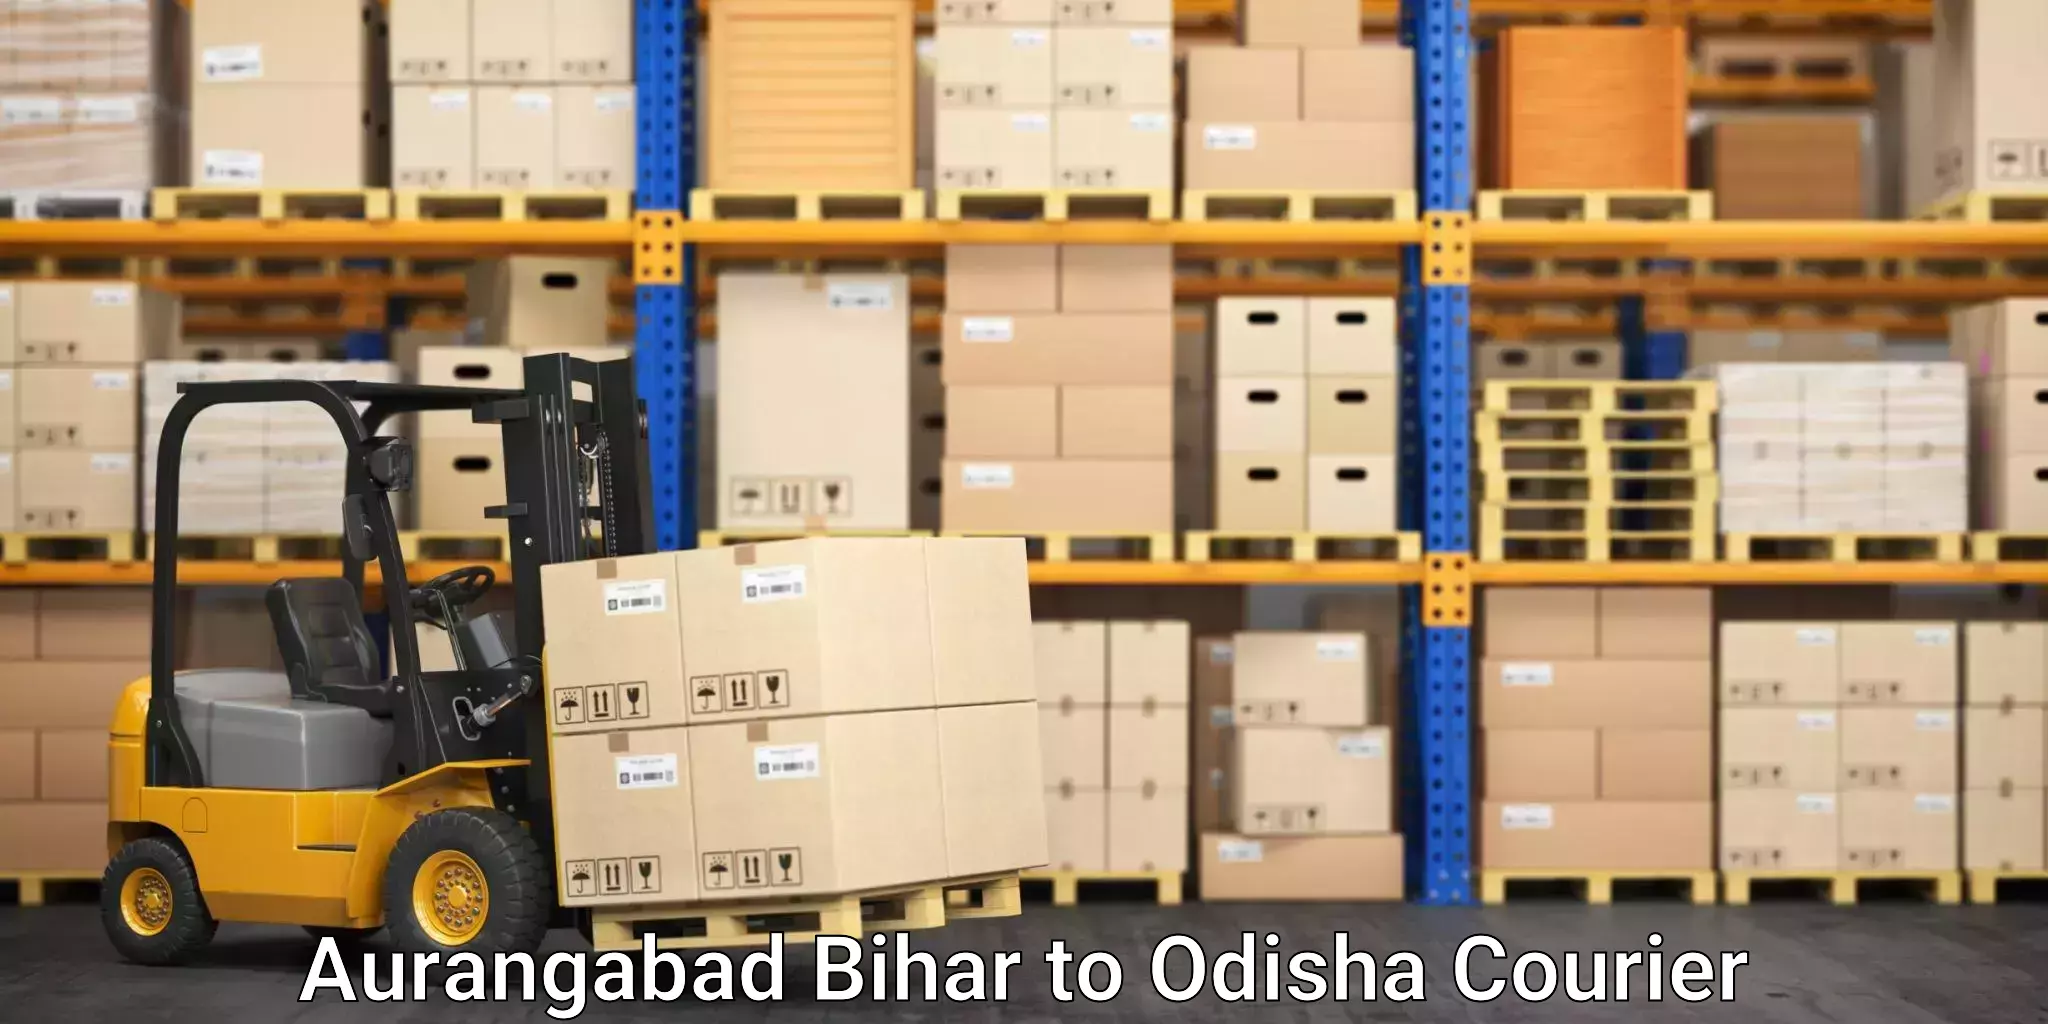 Trusted relocation services Aurangabad Bihar to Odisha